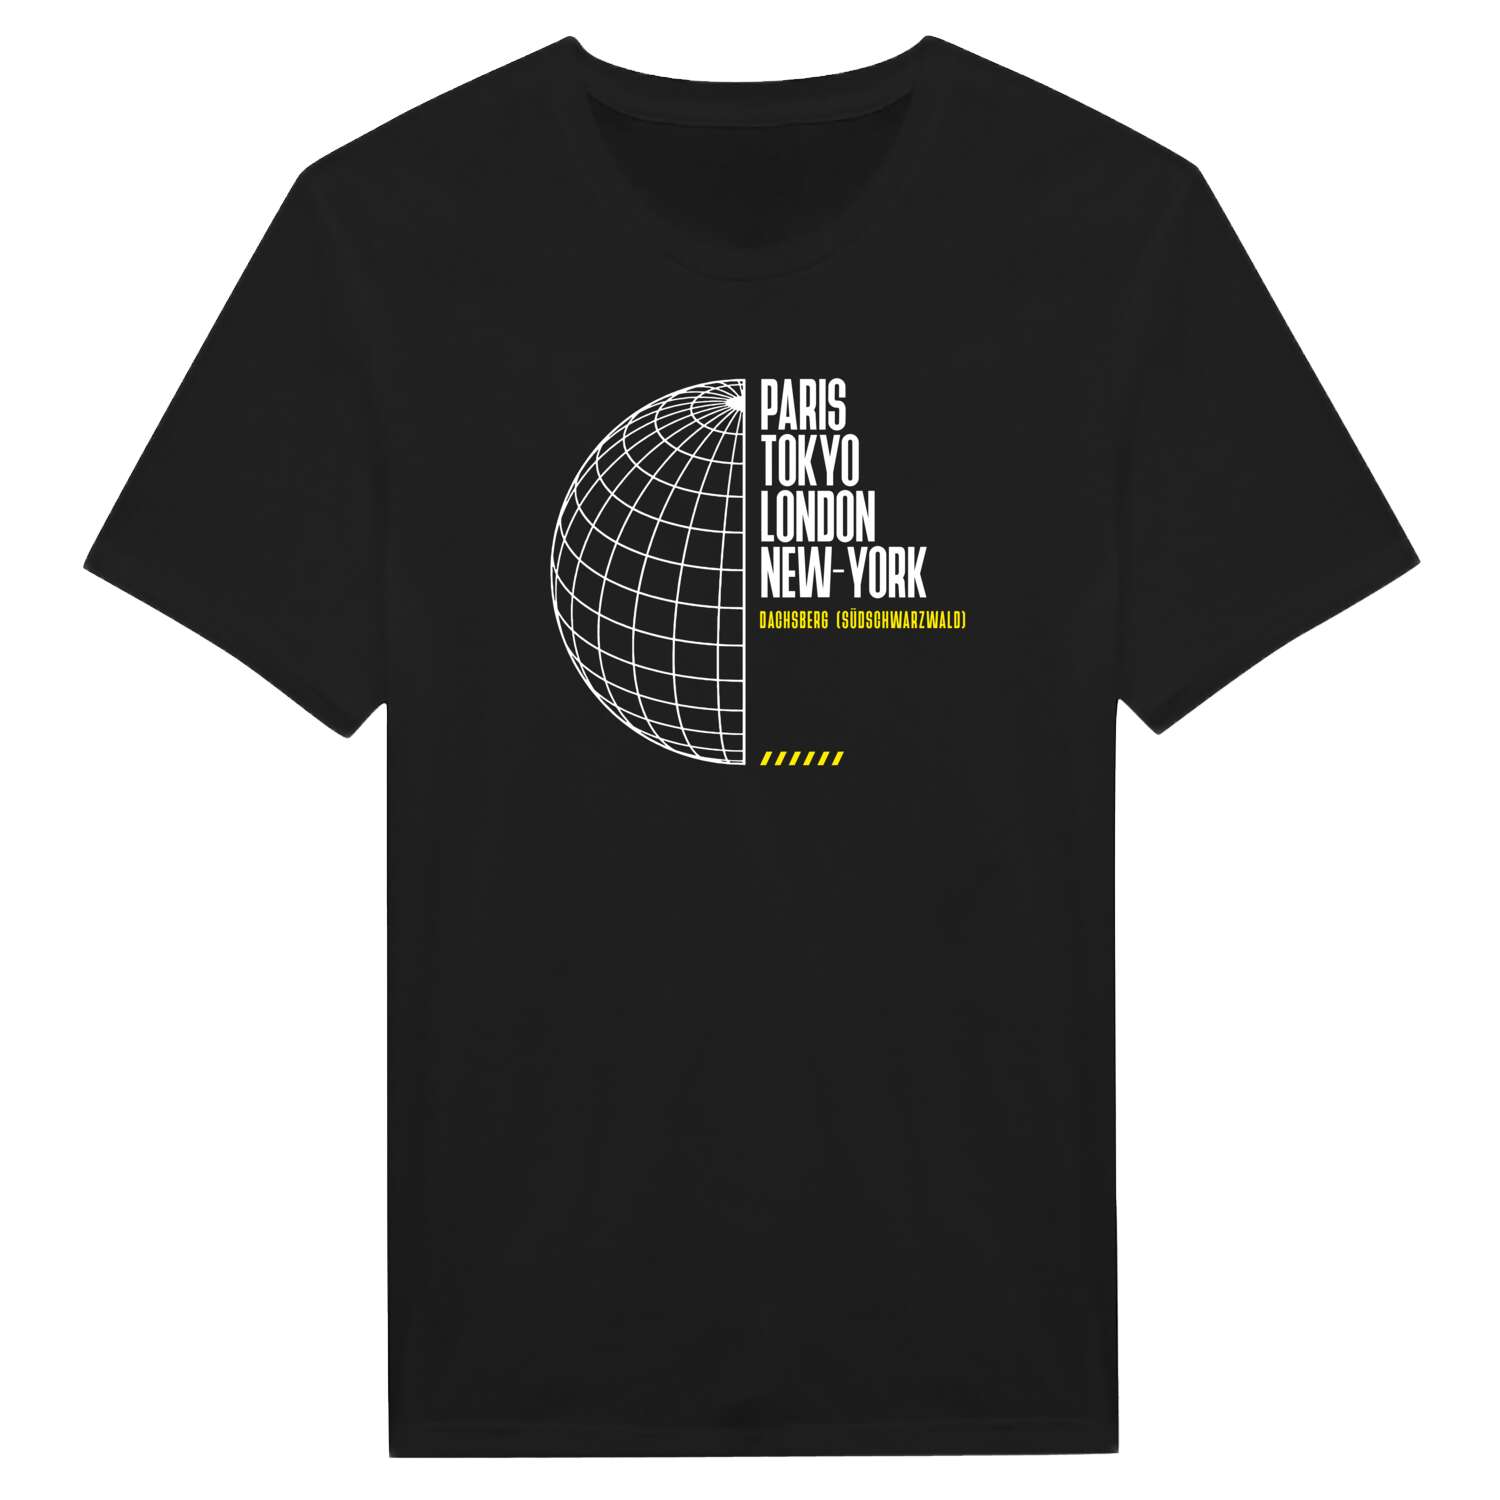 Dachsberg (Südschwarzwald) T-Shirt »Paris Tokyo London«